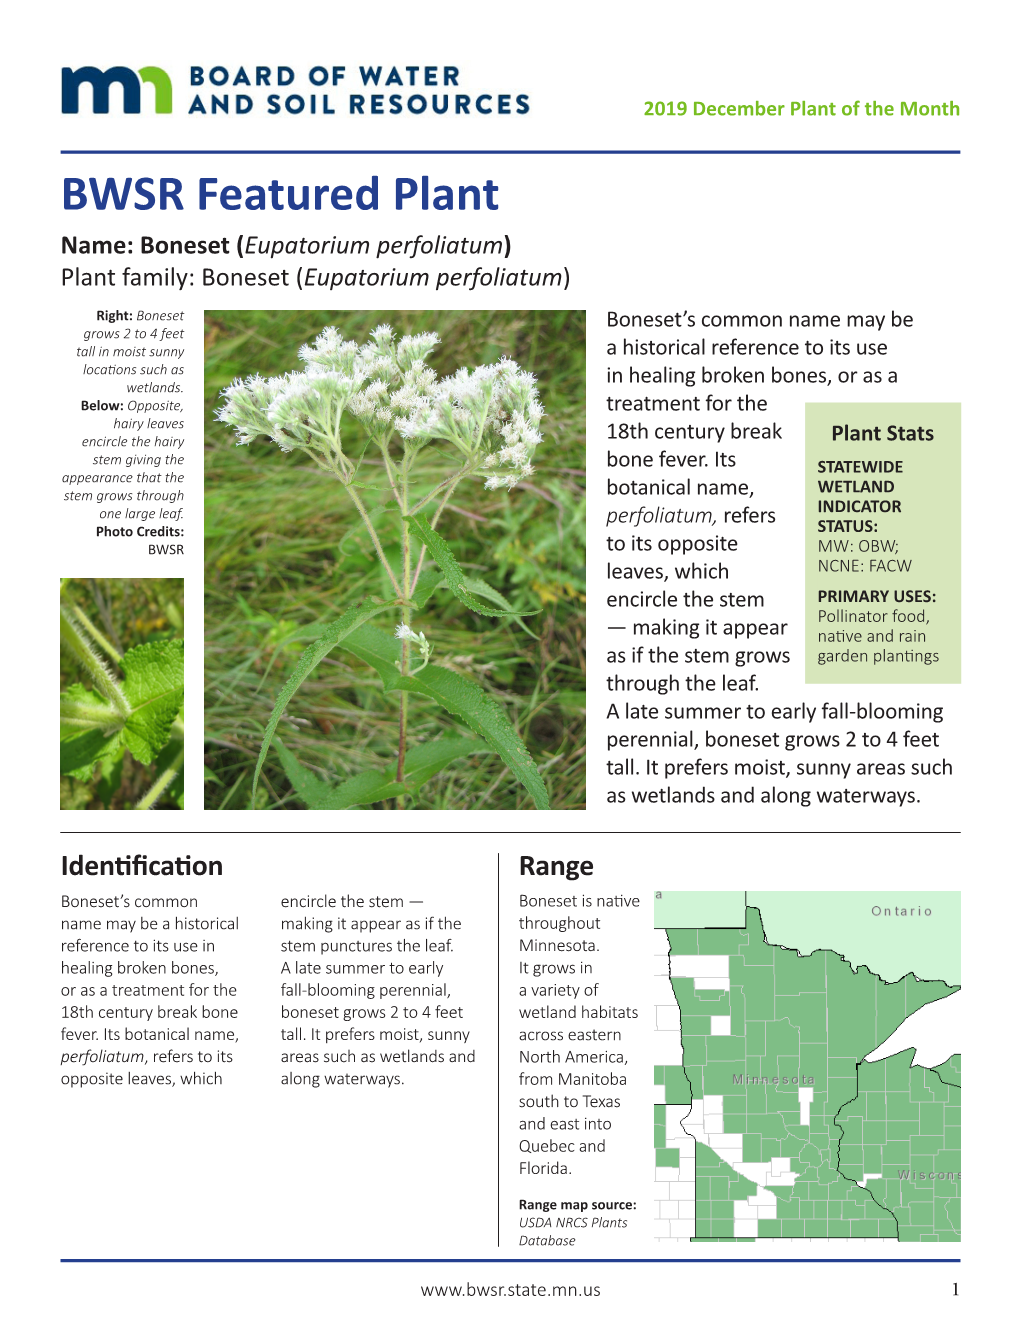 BWSR Featured Plant: Boneset